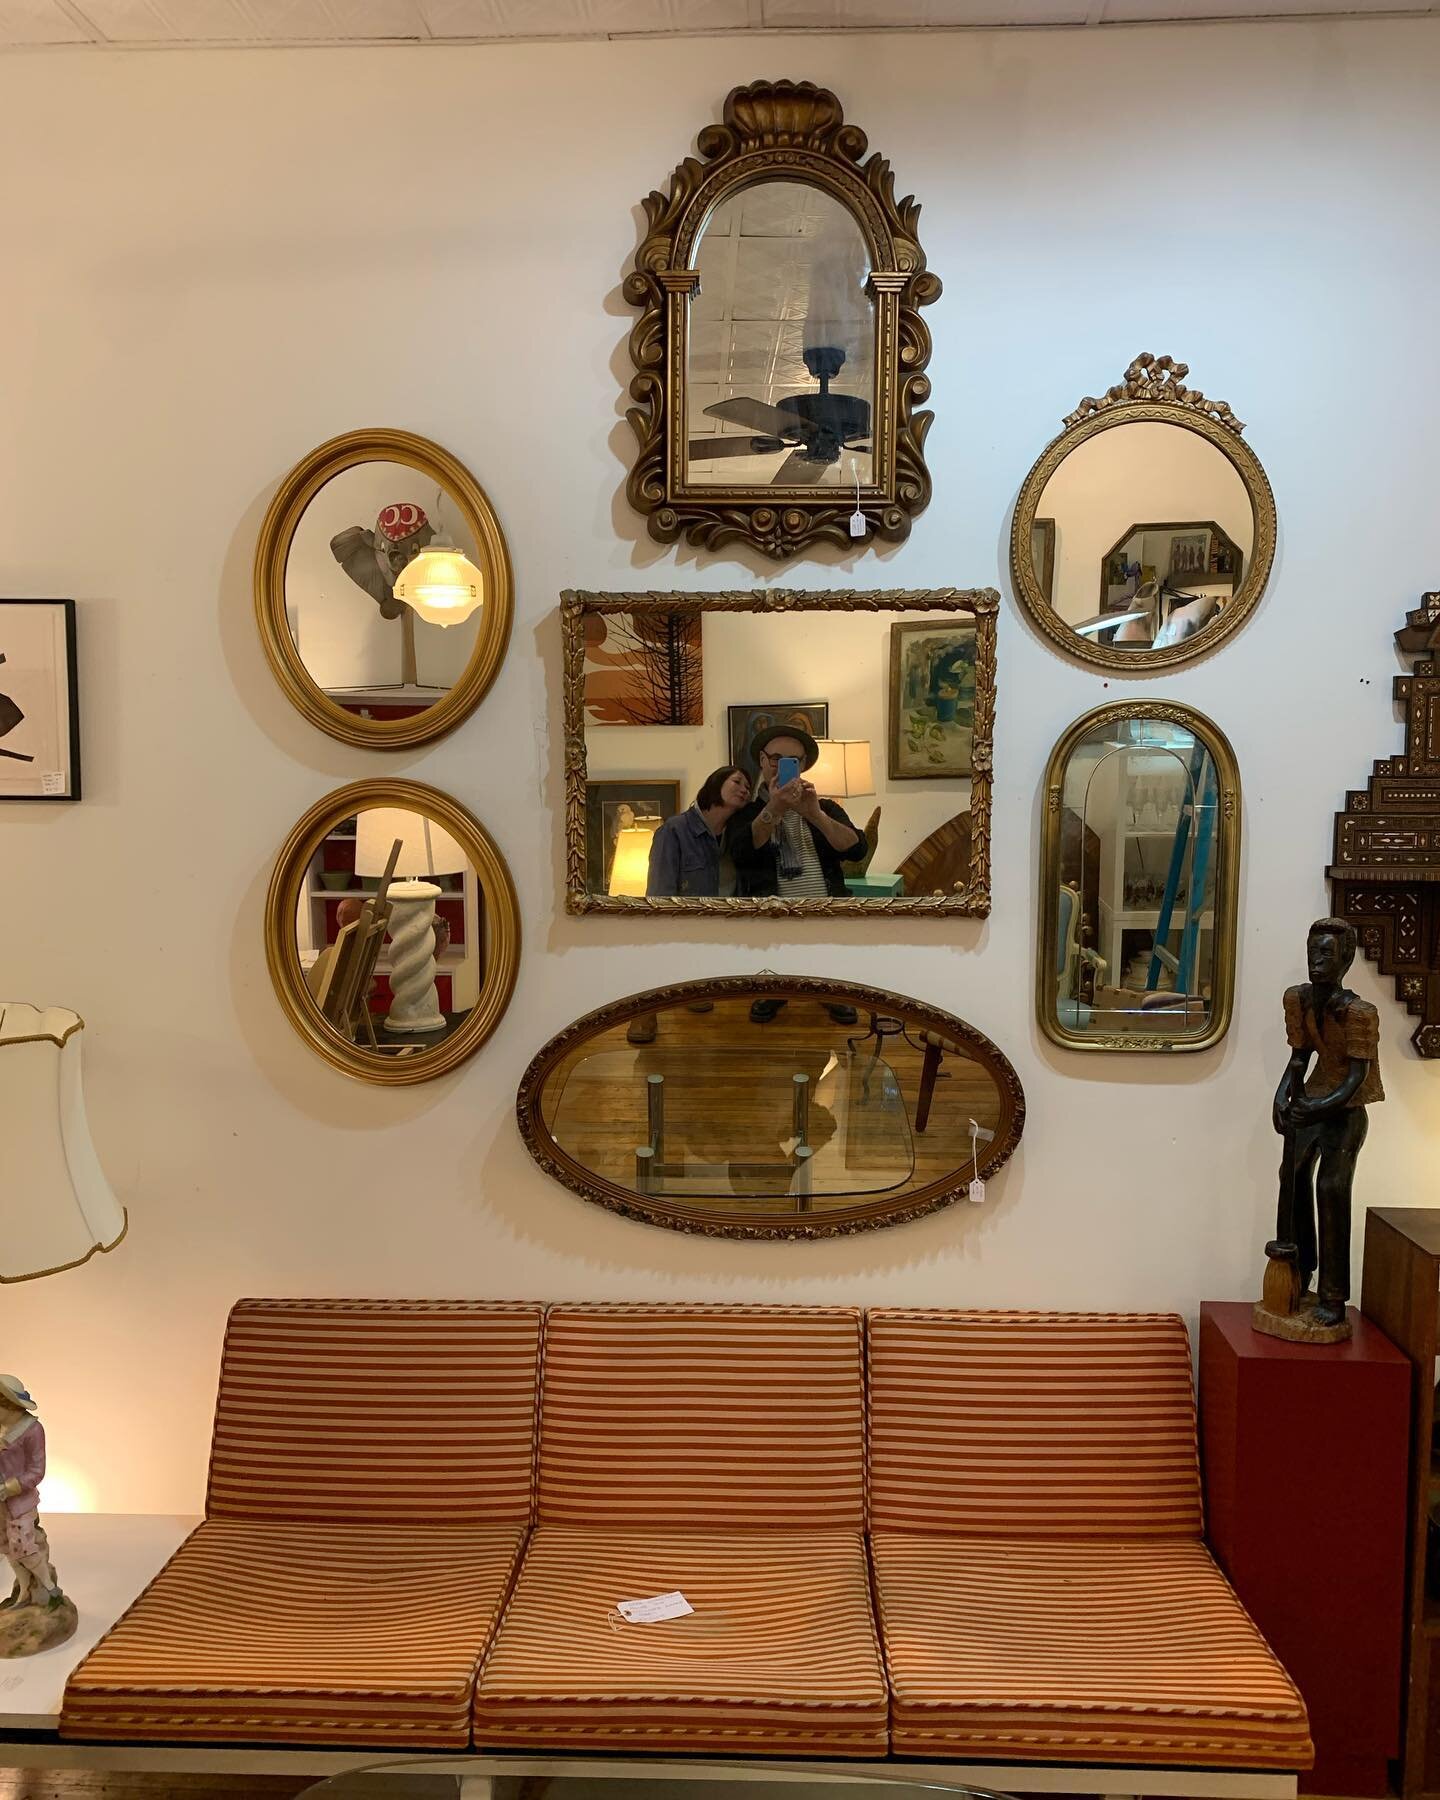 A handsome group of vintage and antique gilt mirrors fresh on display. Affordable sparkle priced in the $65 to $125 range. #vintagedesign #interiordesign #flx #genevany #morganlaurent #vintageshop